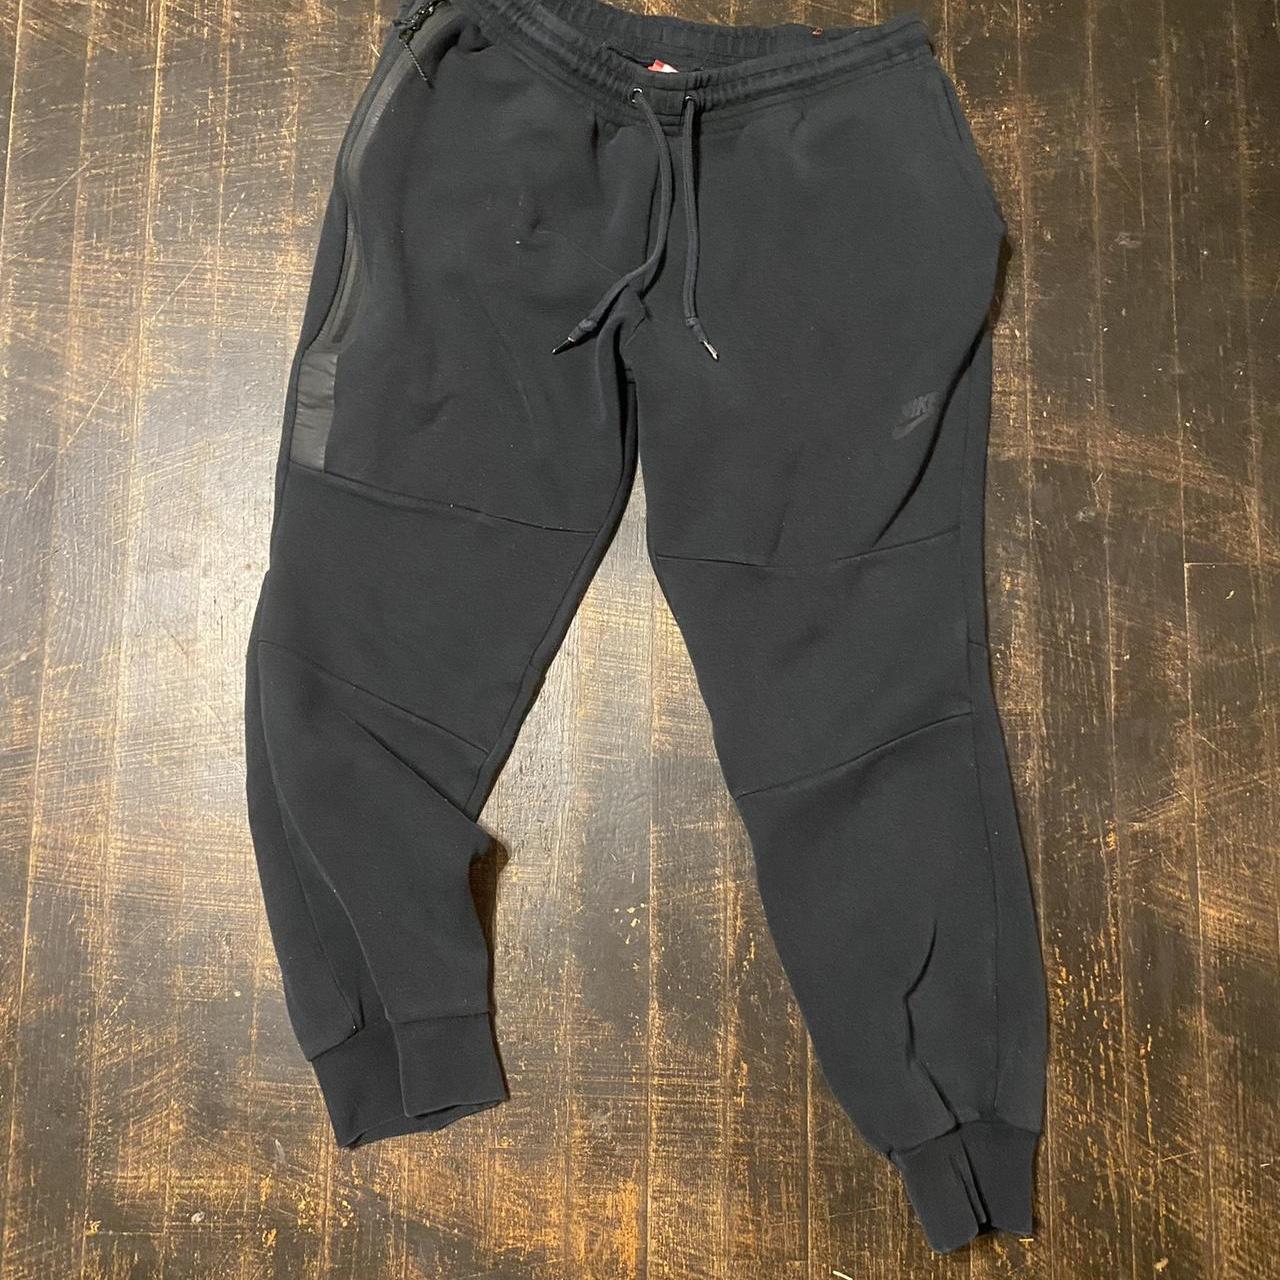 black nike tech pants size large very good condition - Depop